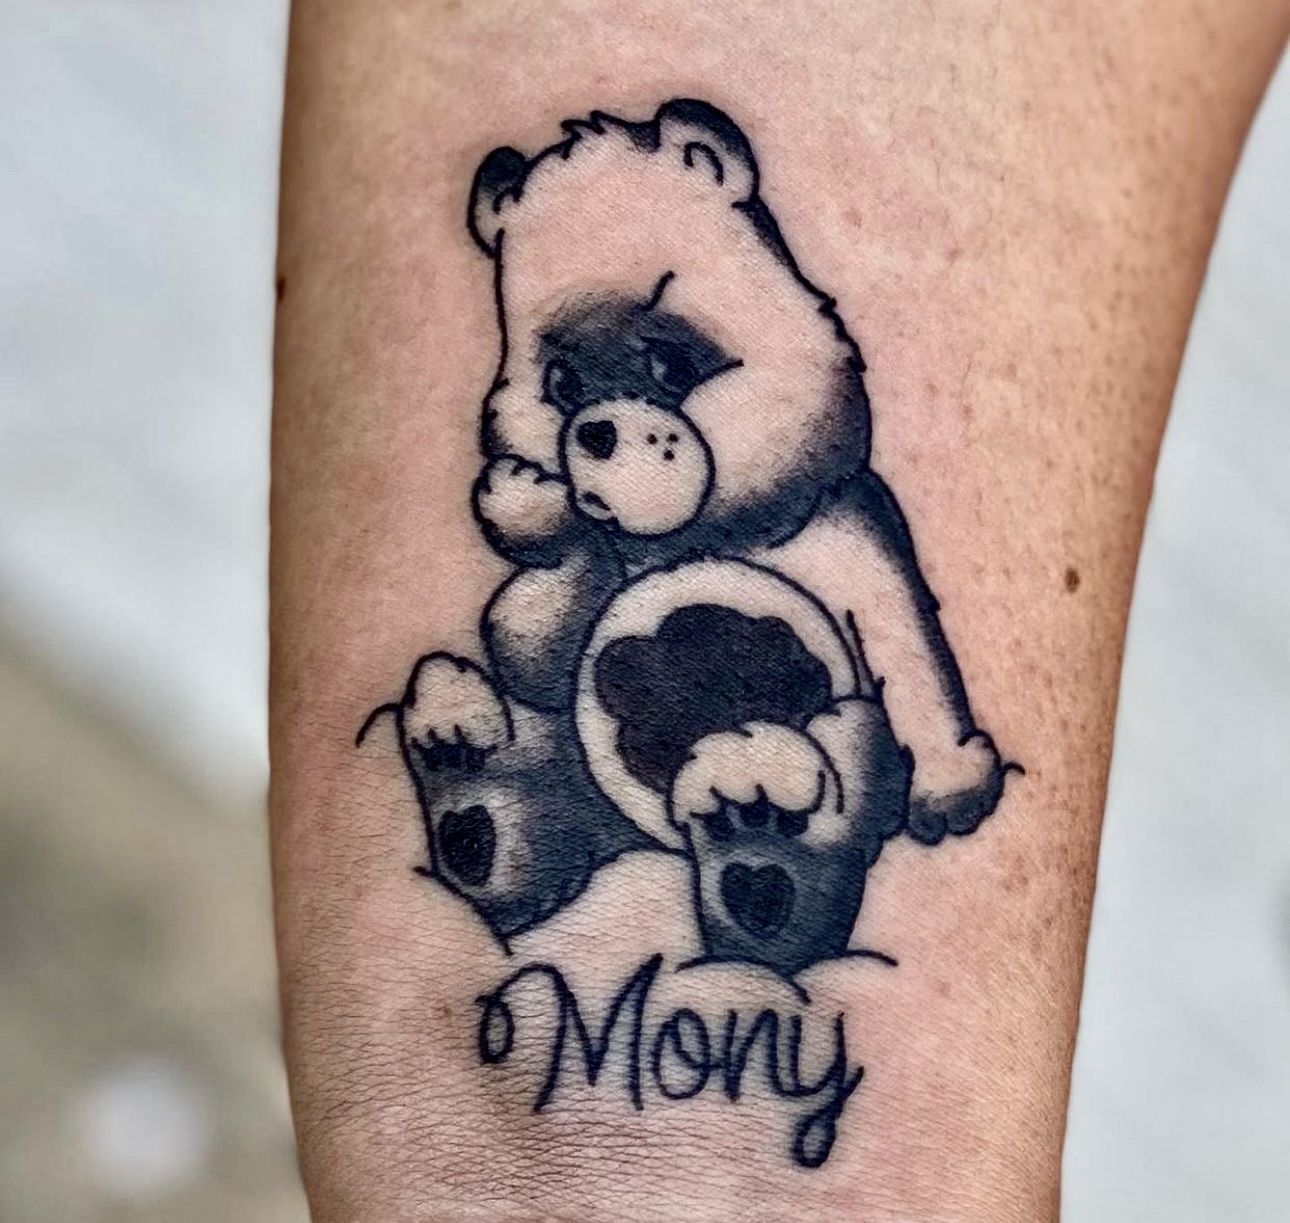 Tattoo of a bear on a man's arm